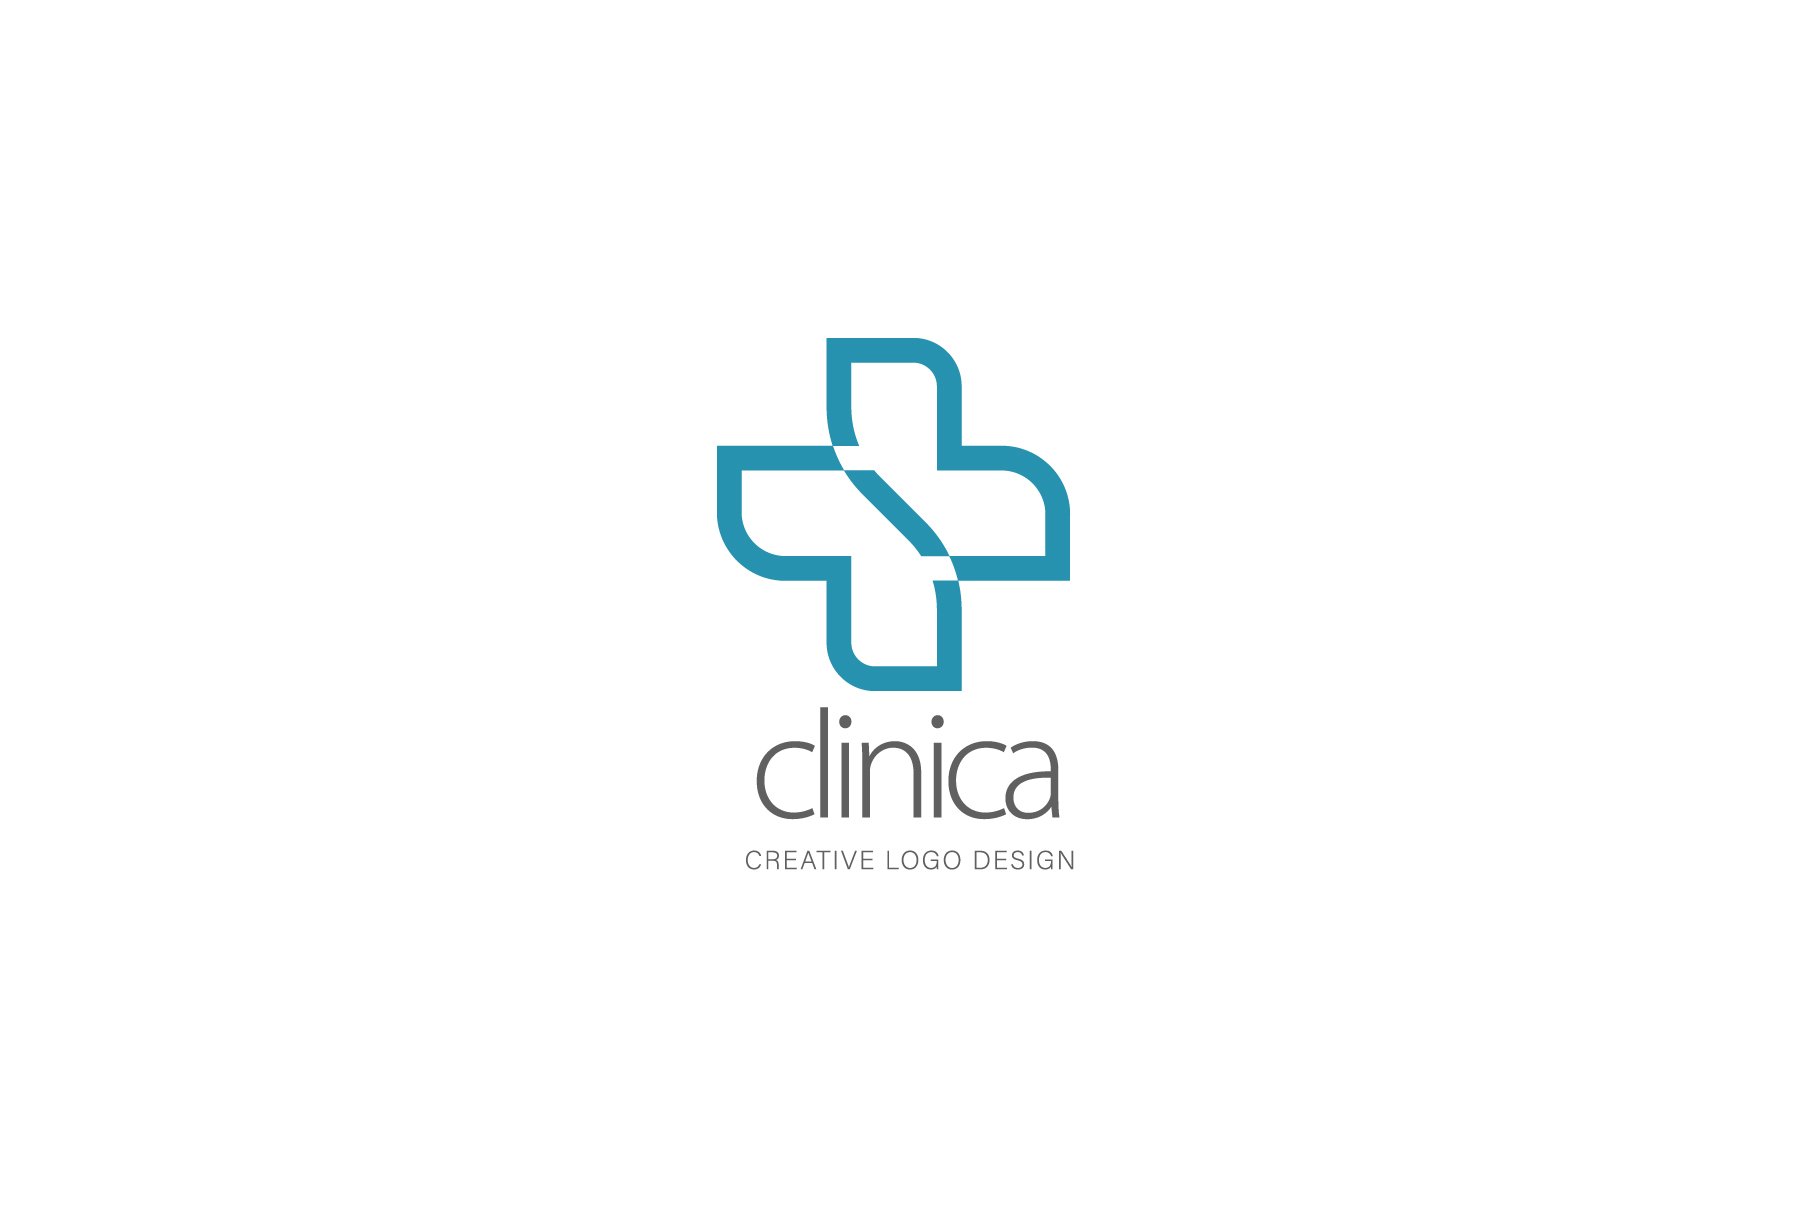 medical logo cover image.